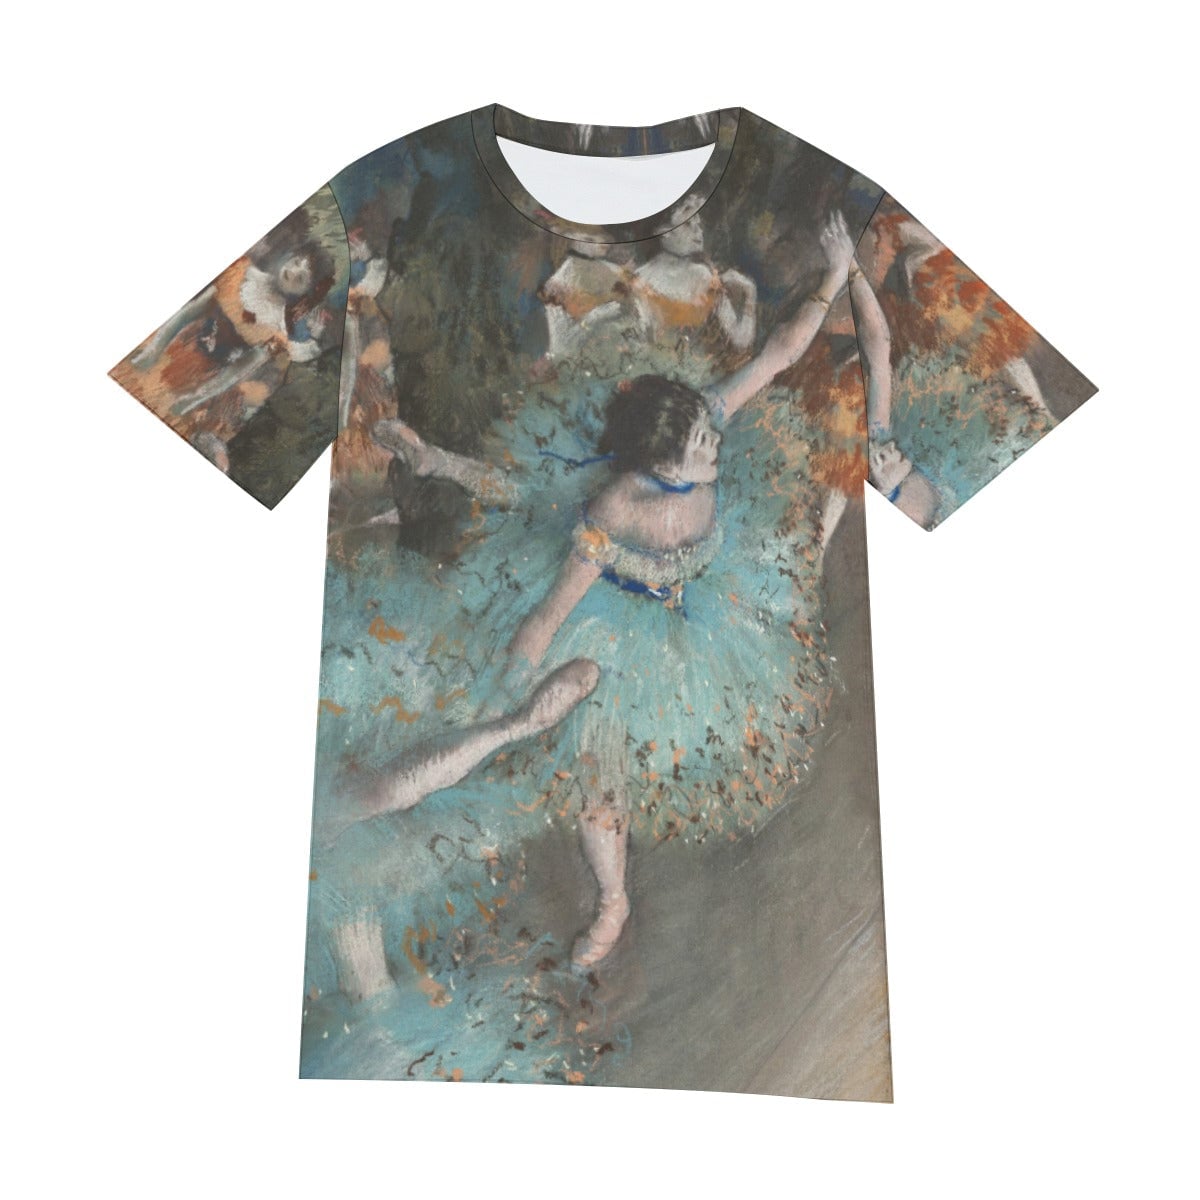 Swaying Dancer Painted by Edgar Degas T-Shirt